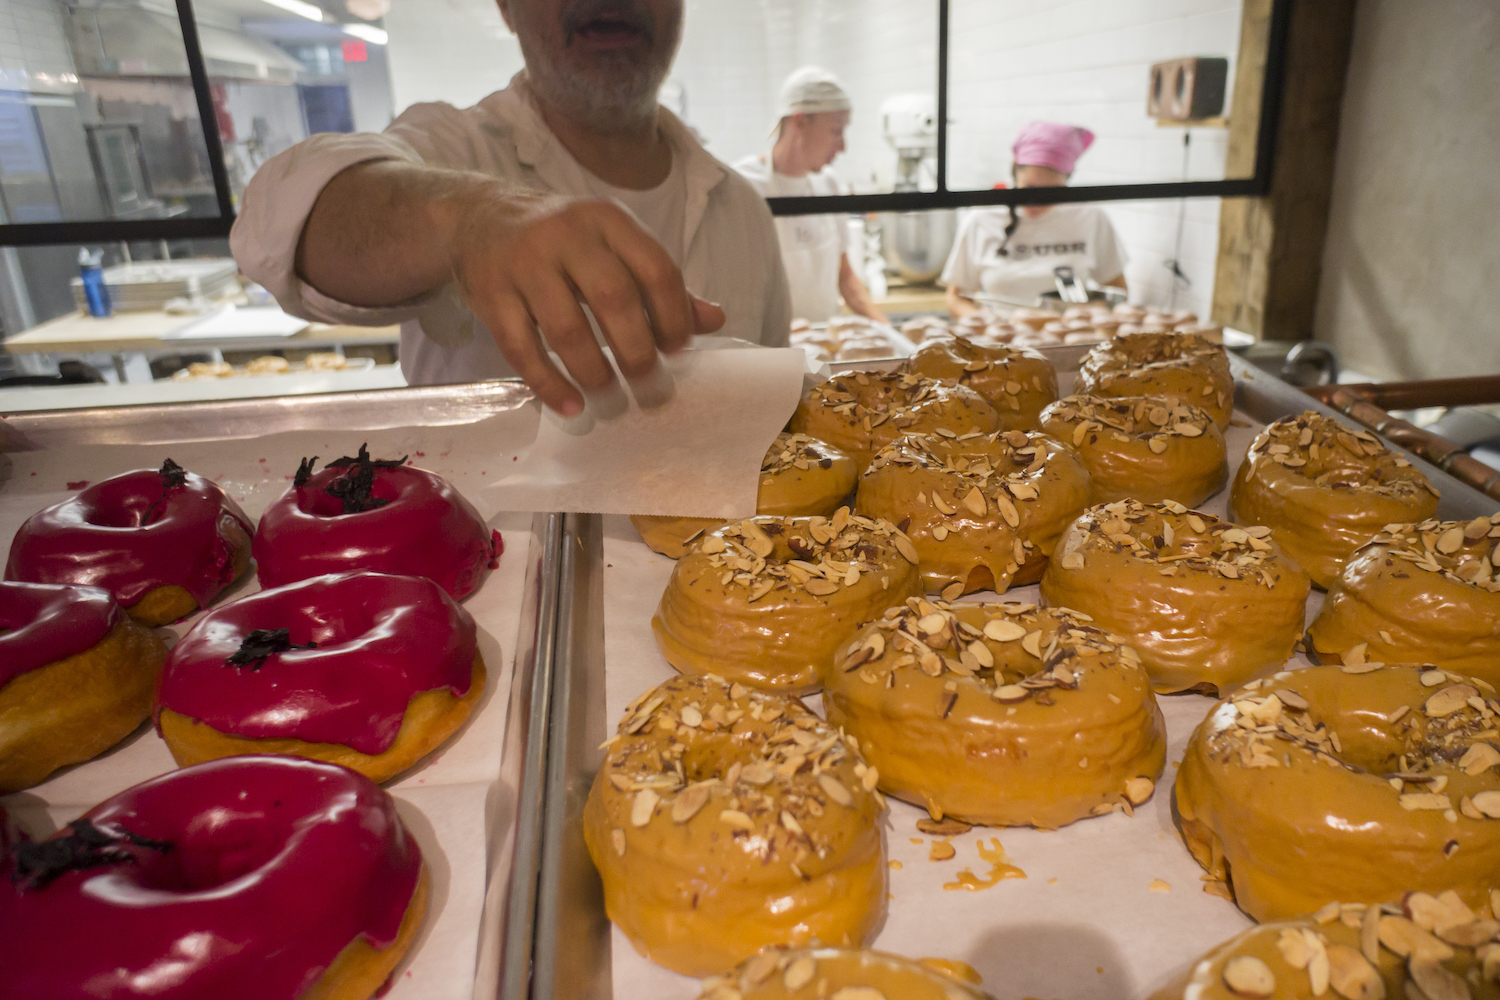 An employee at Dough bakery in the Flatiron neighborhood of New York serves a dulce de leche doughnut to a visitor